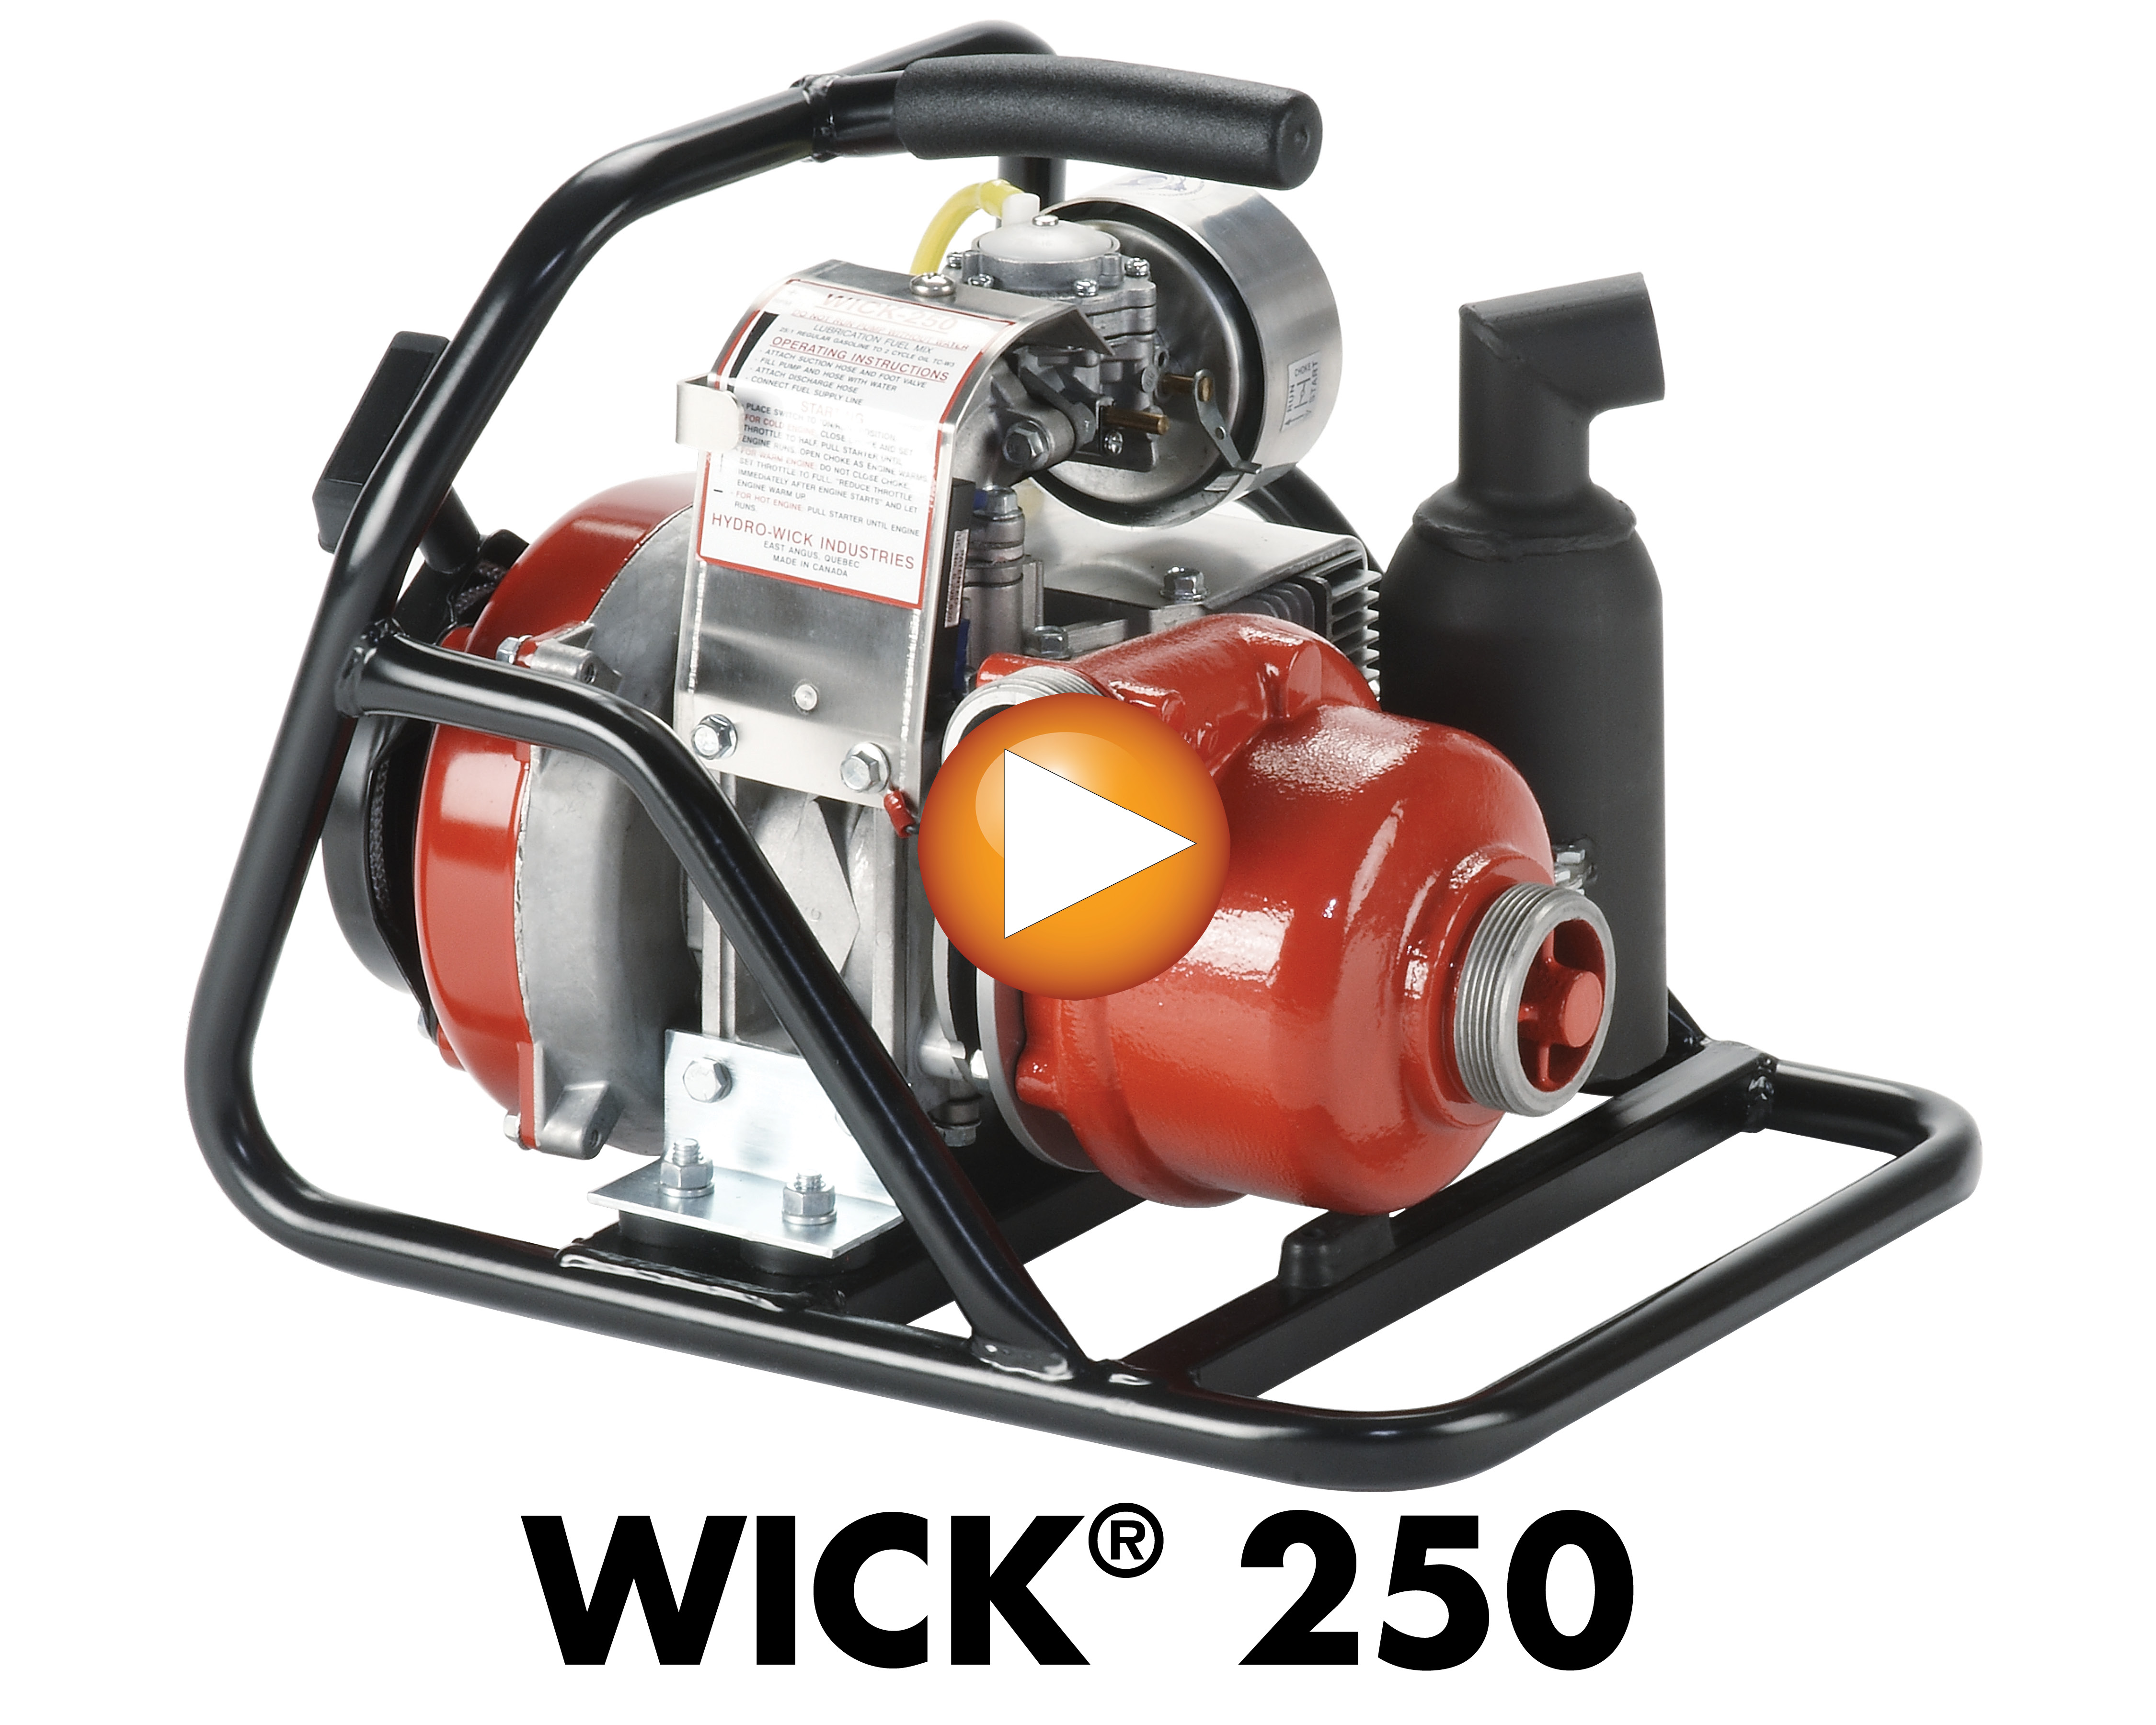  Wick 250